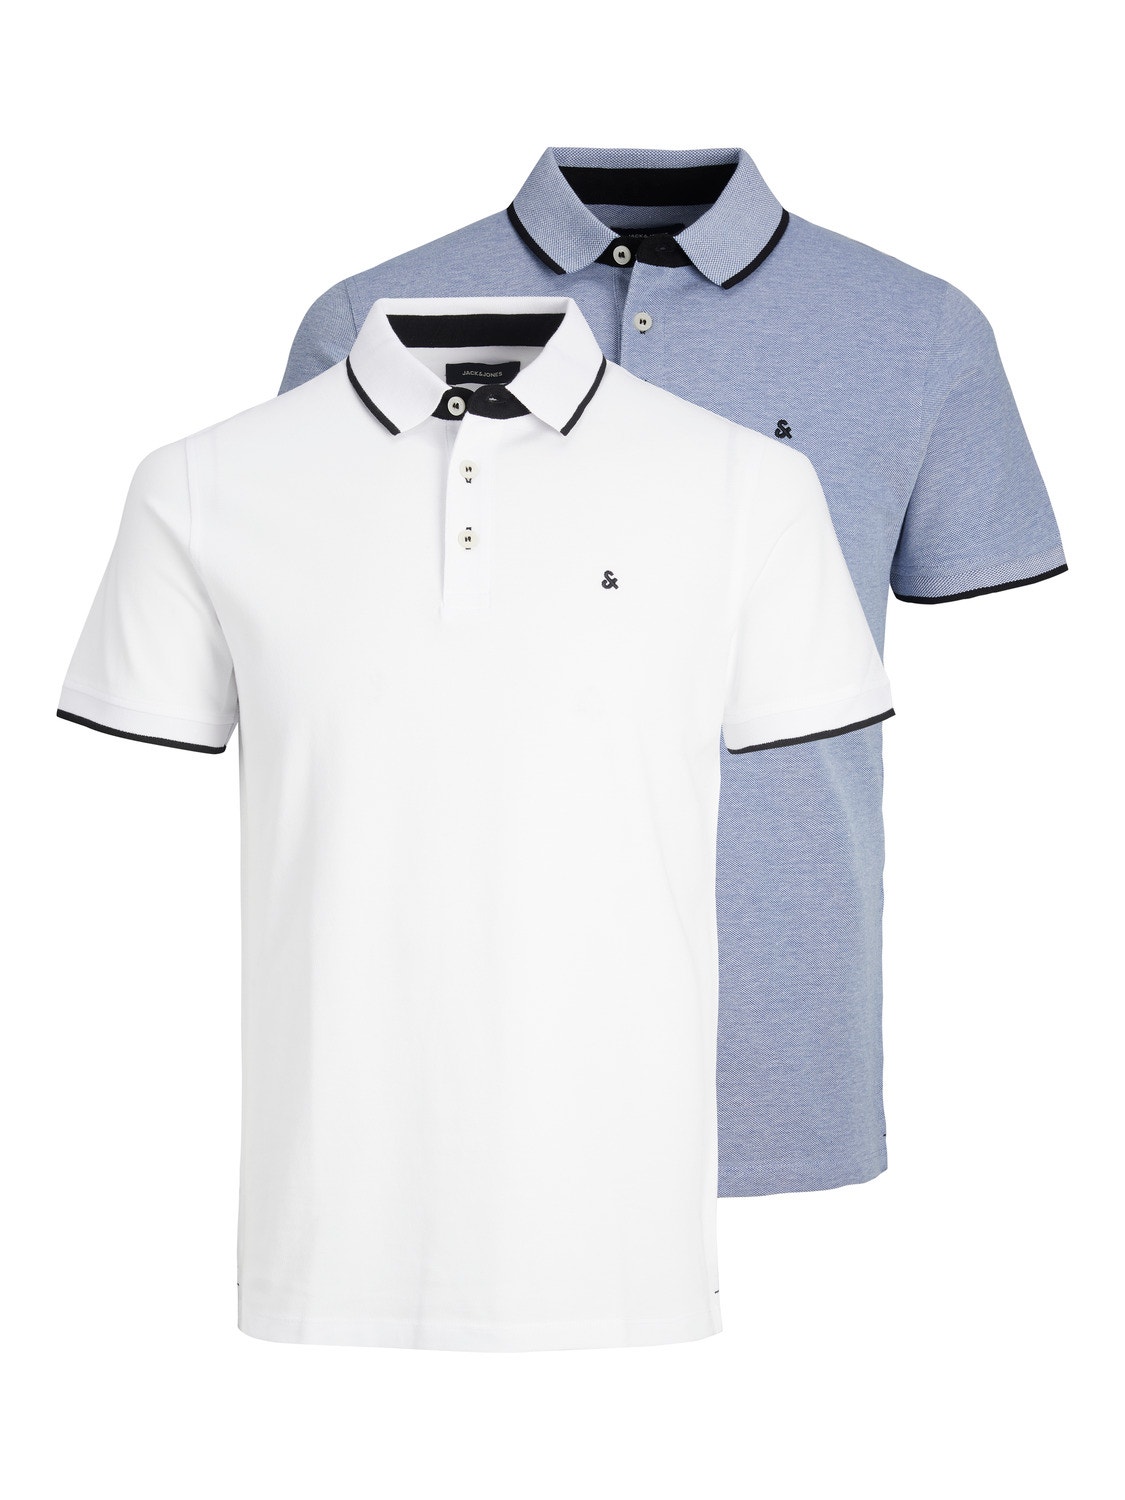 Jack & Jones 2-pak Gładki Polo T-shirt -Bright Cobalt - 12191216